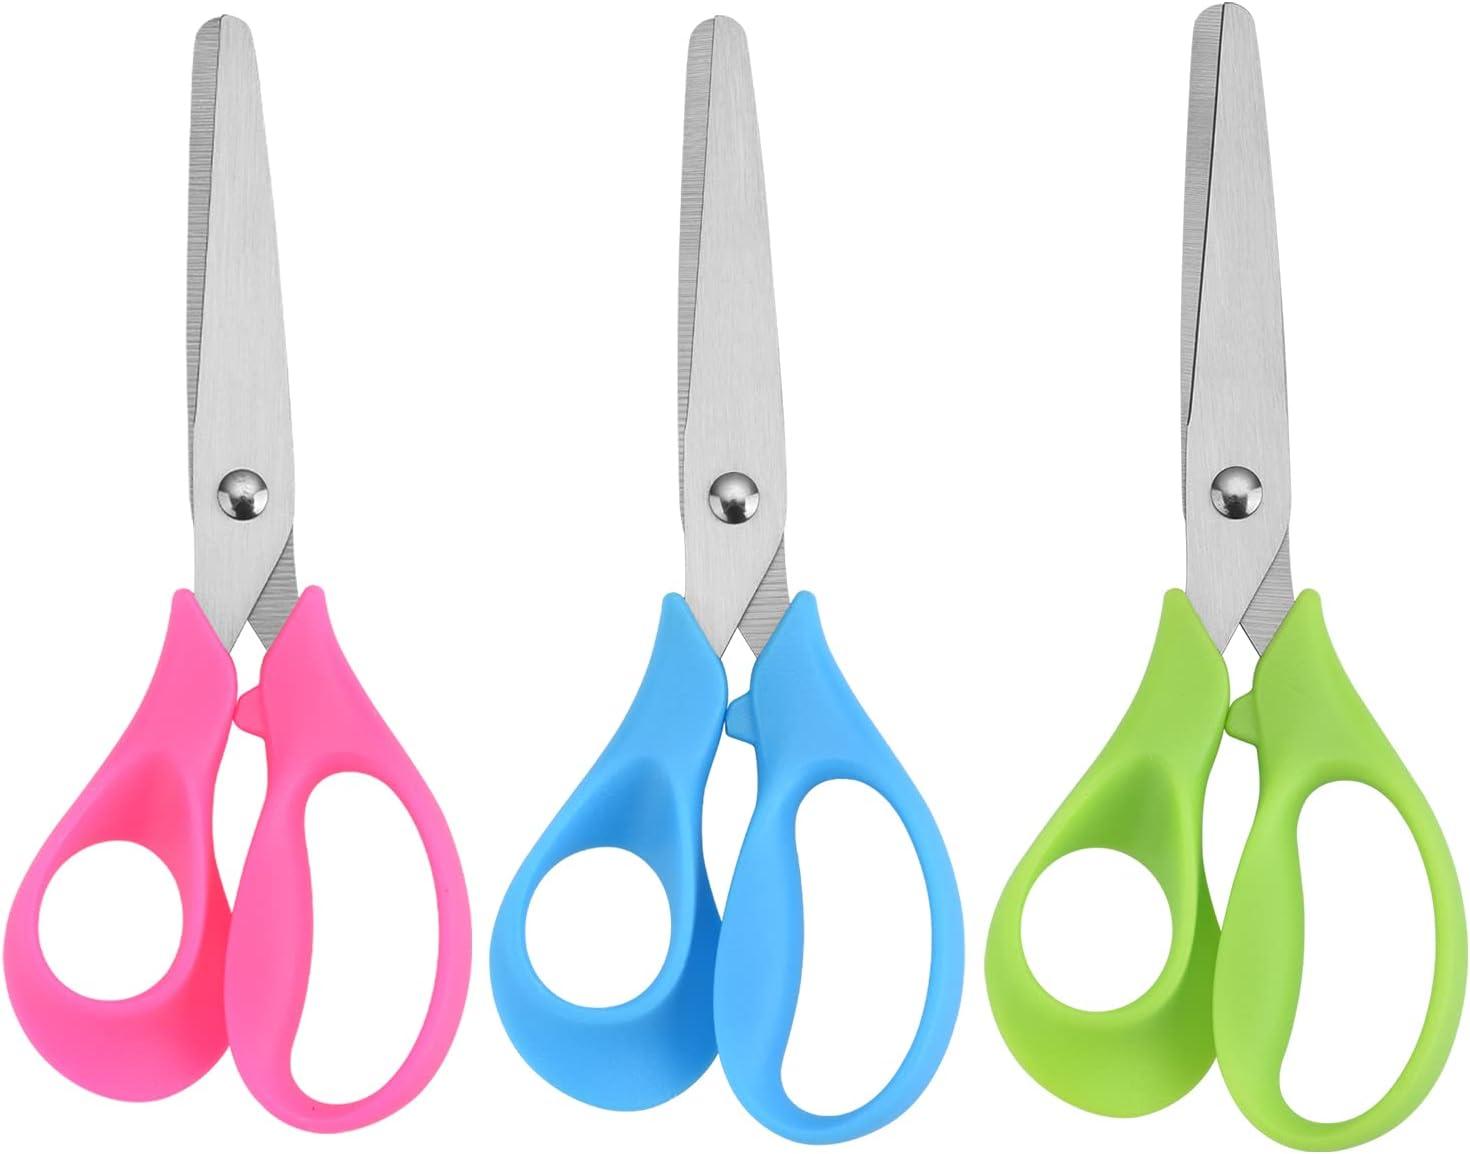 SUNCRAFT Small kitchen scissors, left-handed